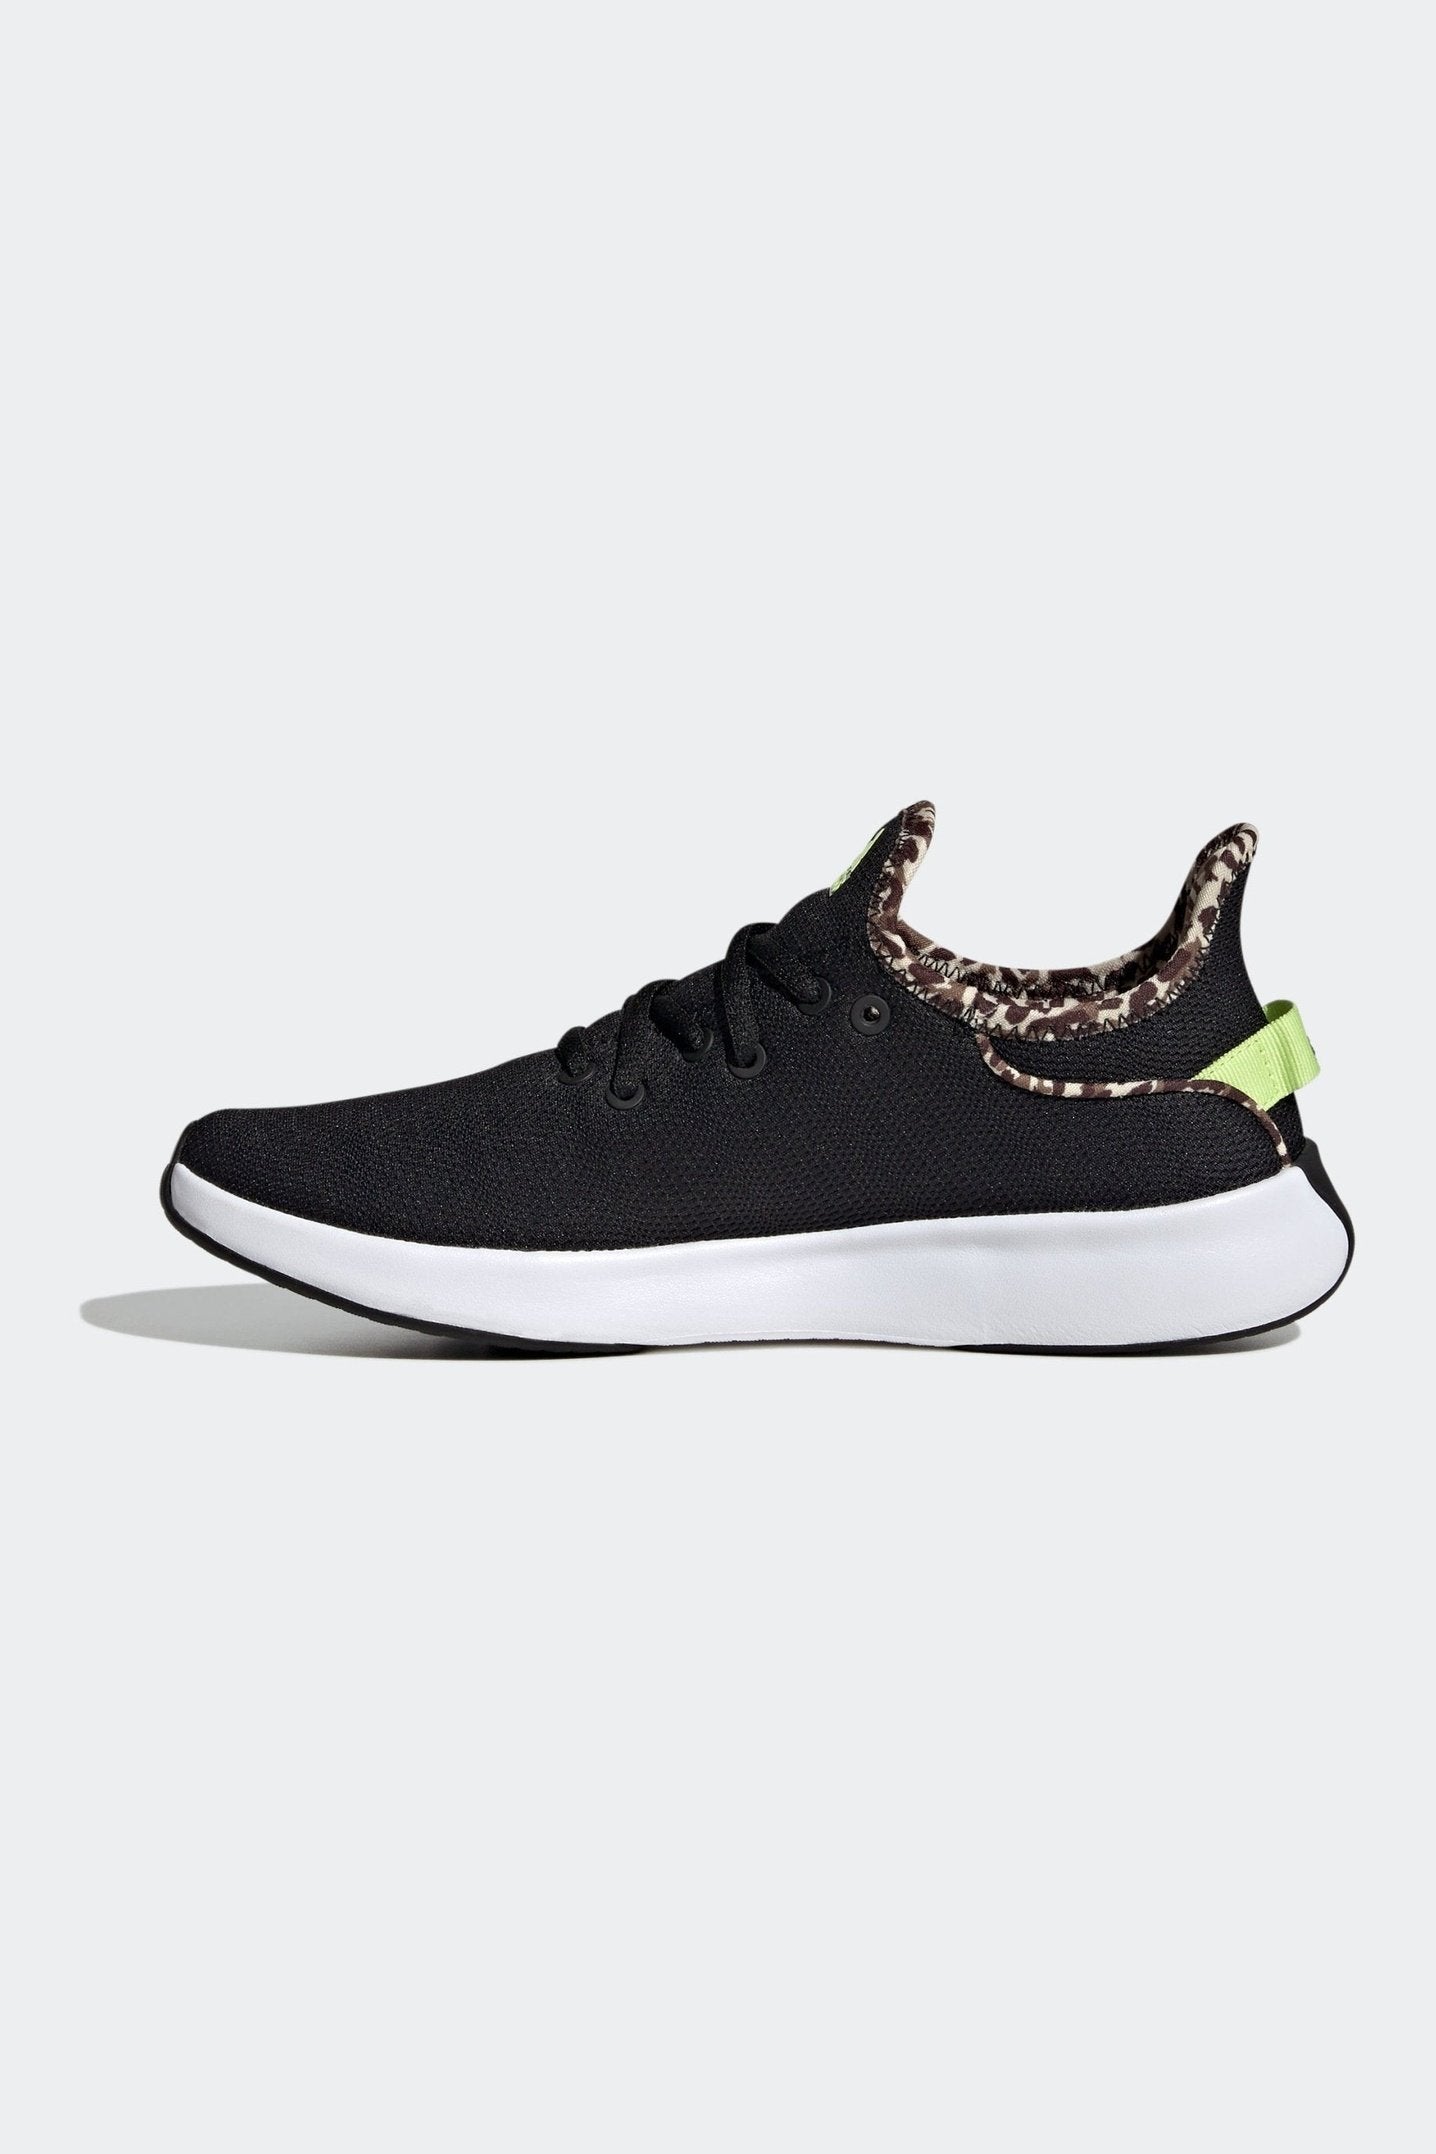 ADIDAS - נעלי ספורט לנשים CLOUDFOAM PURE בצבע שחור - MASHBIR//365